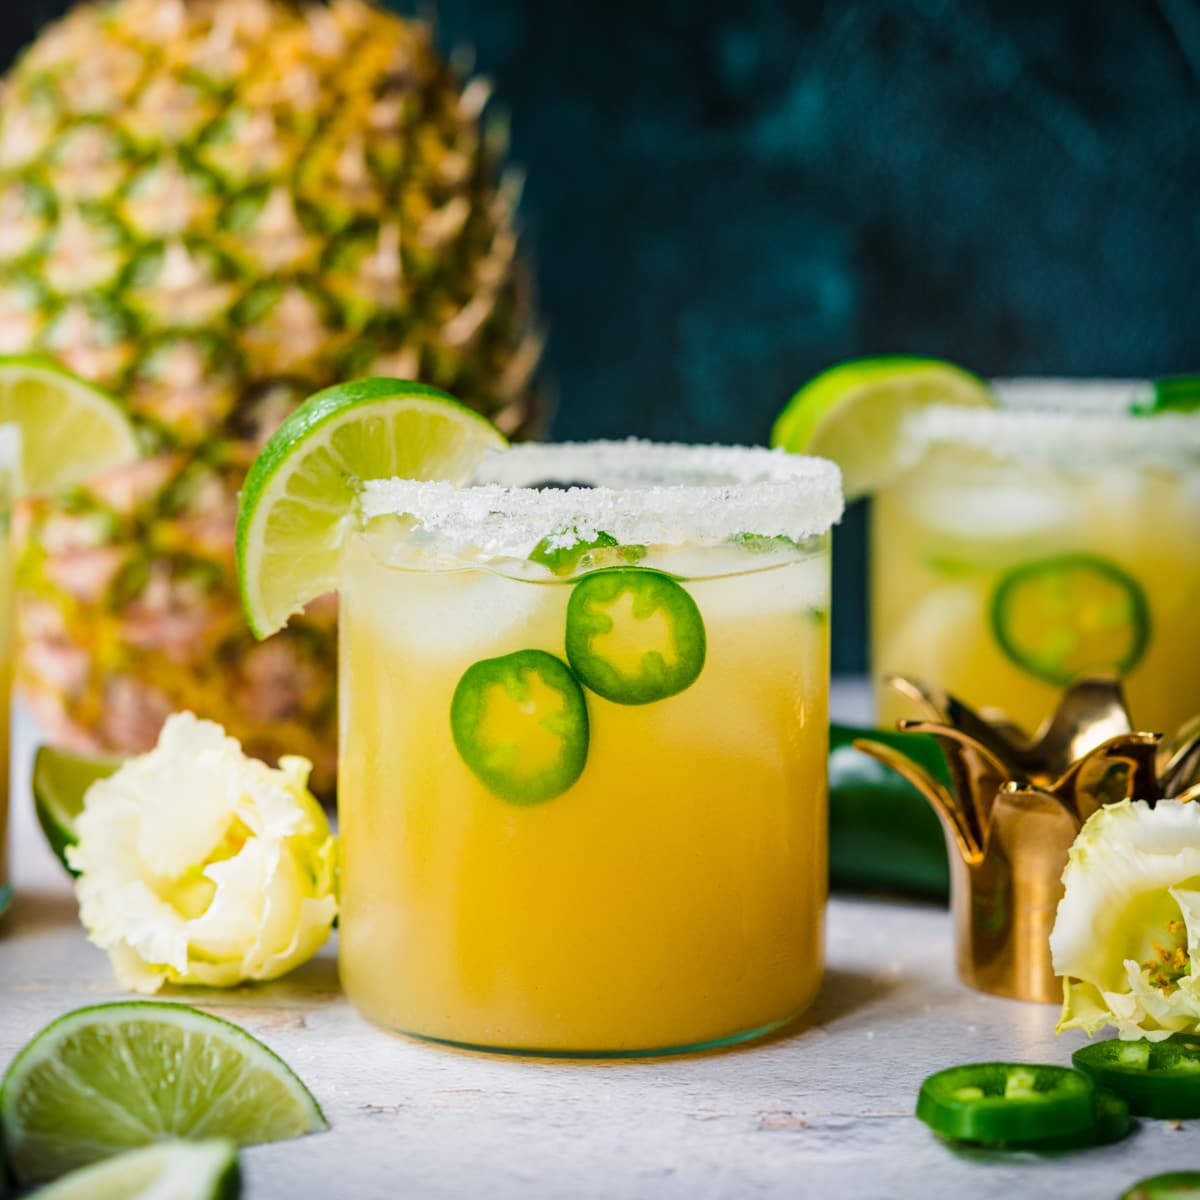 https://www.crowdedkitchen.com/wp-content/uploads/2021/05/Pineapple-Jalapeno-Margaritas-11.jpg